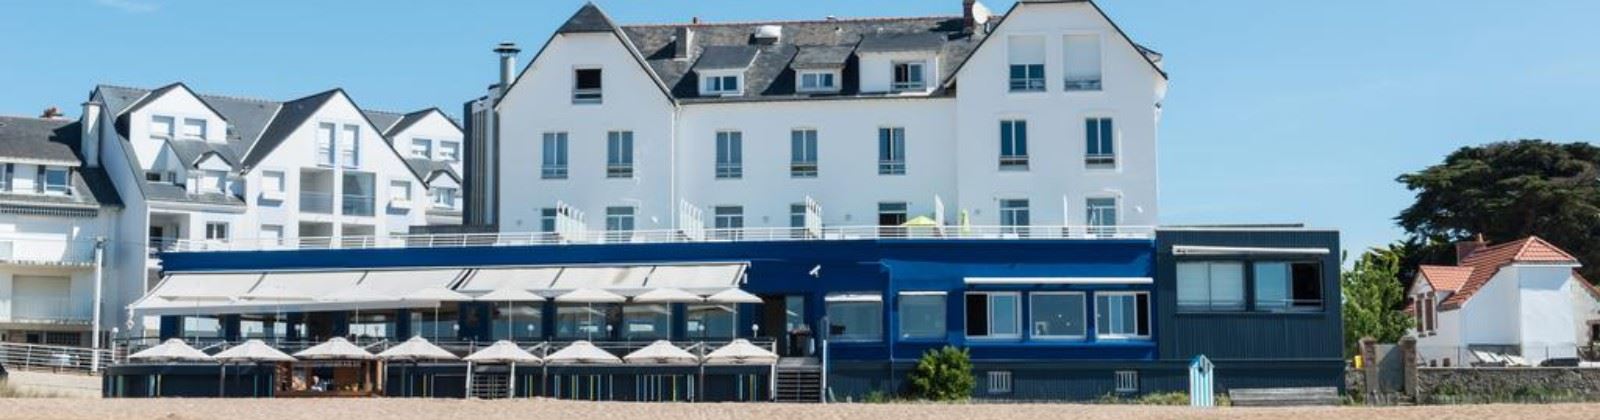 OLEVENE image - hotel-de-la-plage-olevene-seminaire-restaurant-meeting-reunion-booking-